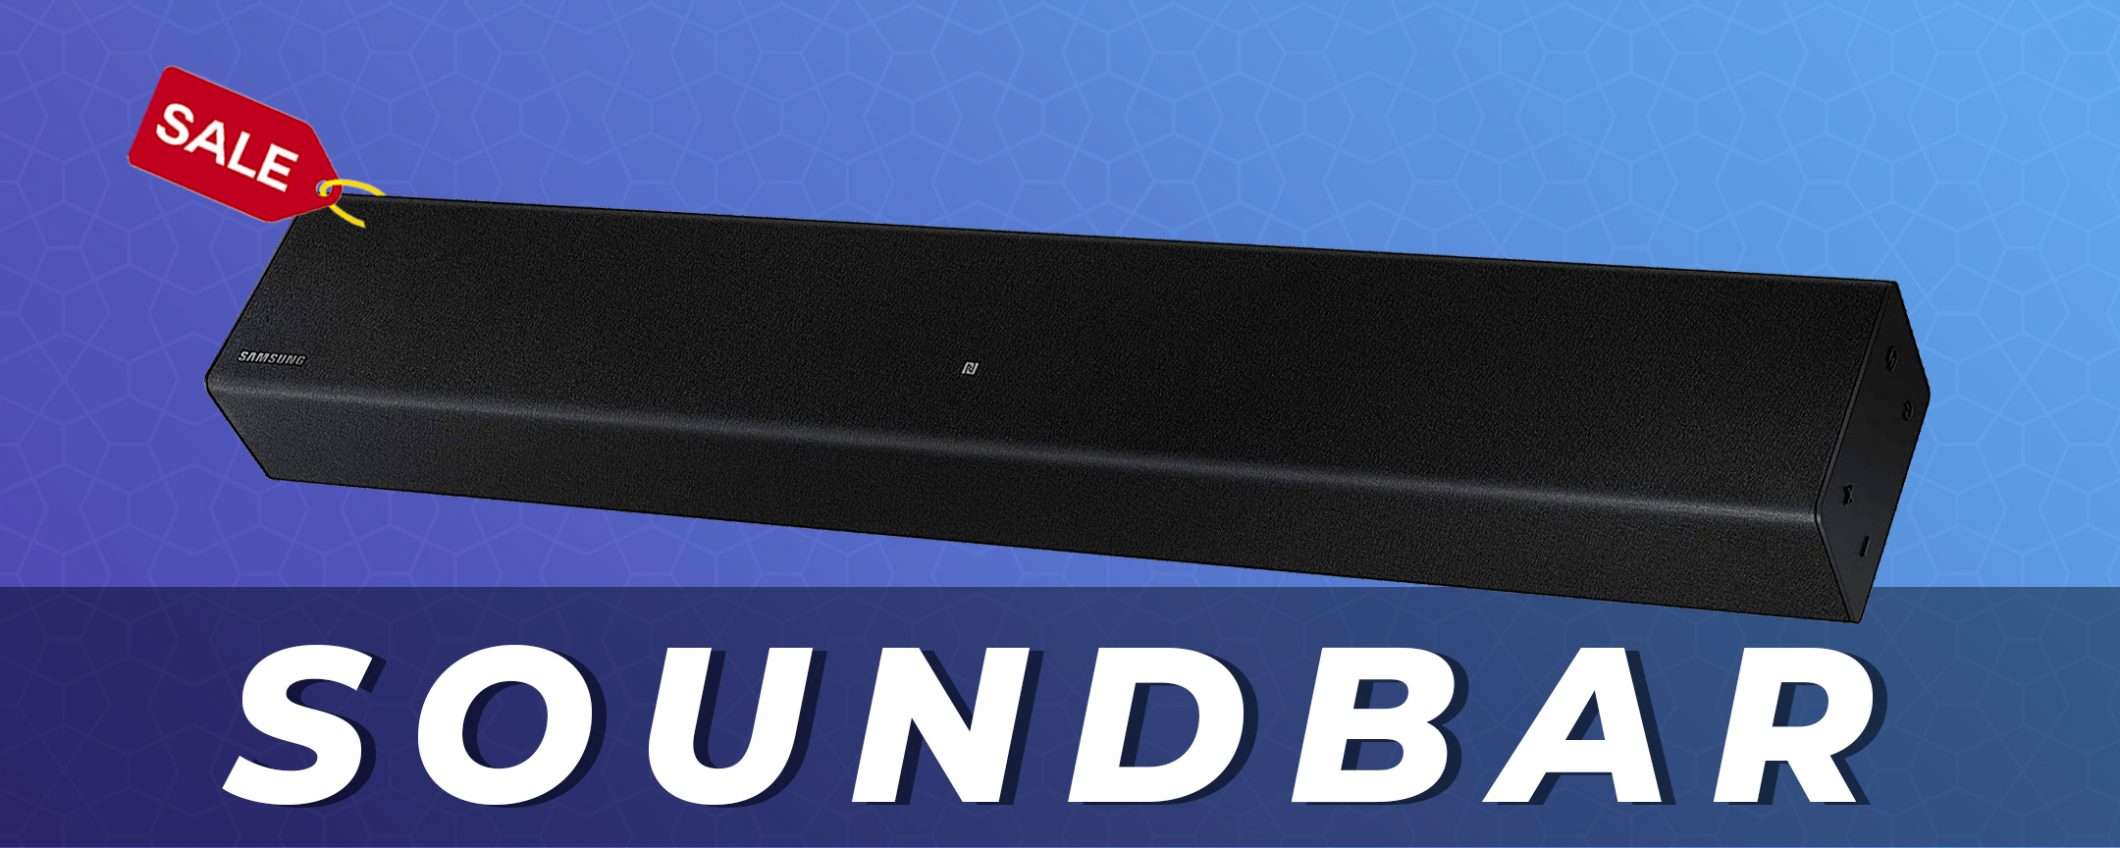 Soundbar Samsung da 40W in super offerta su Amazon (-40%)